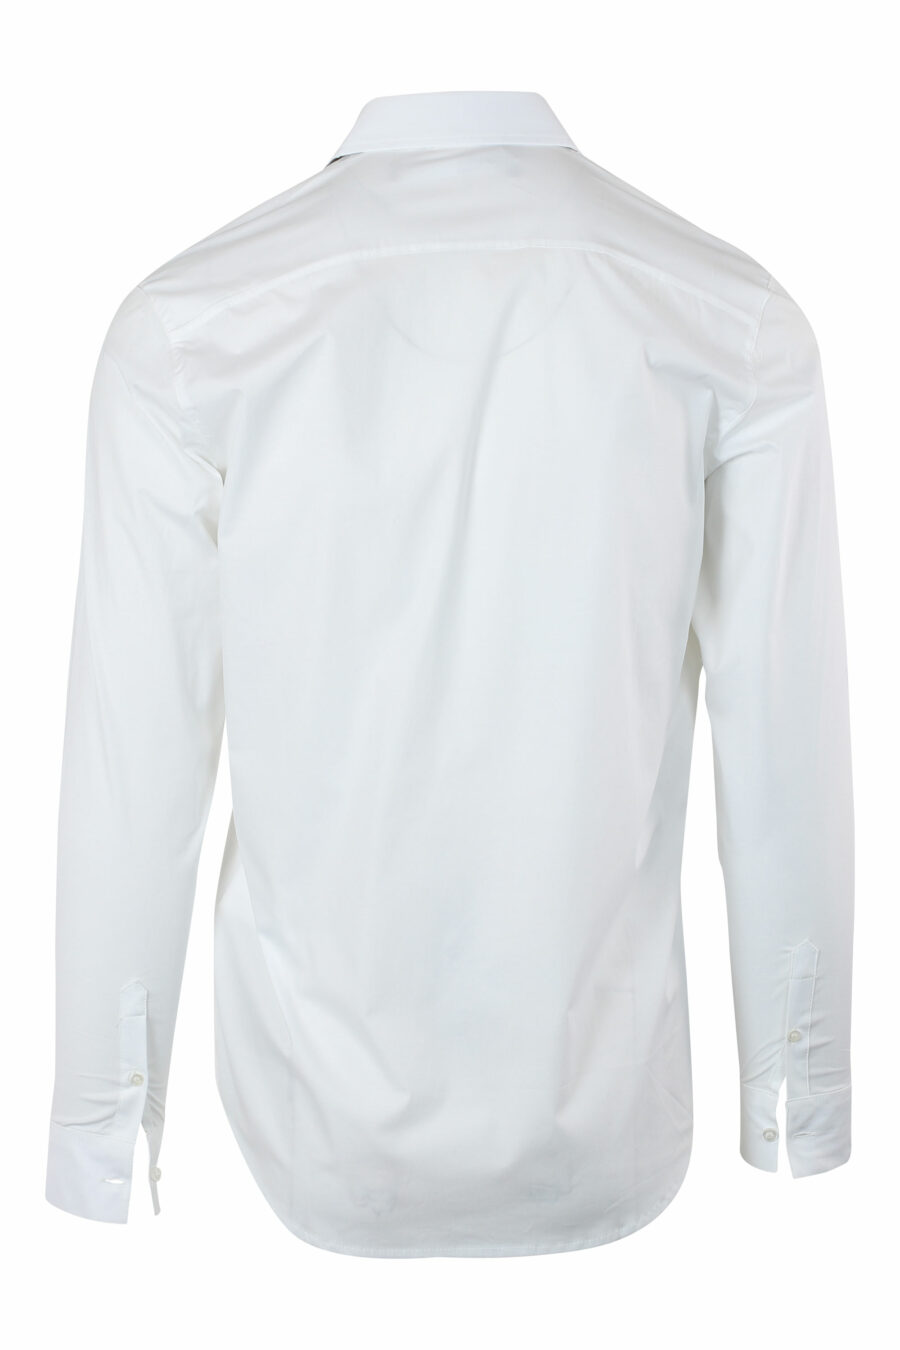 Camisa blanca con logo teddy bordado - IMG 9614